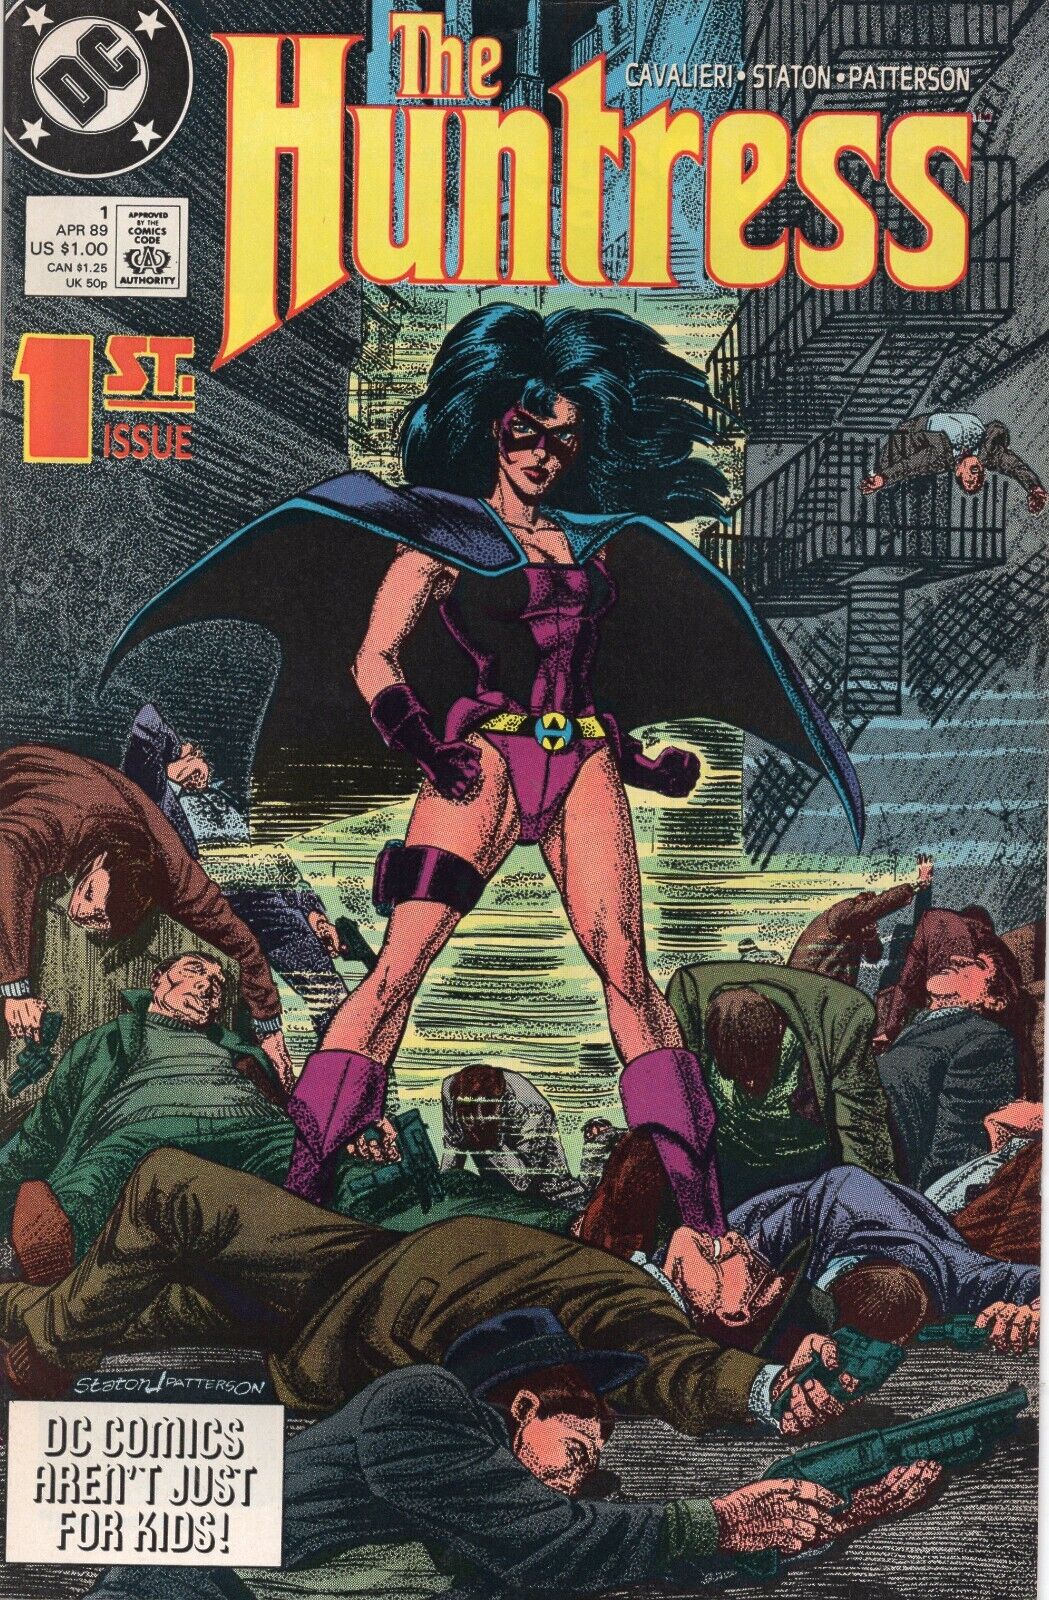 The Huntress #1 (DC Comics, April 1989)